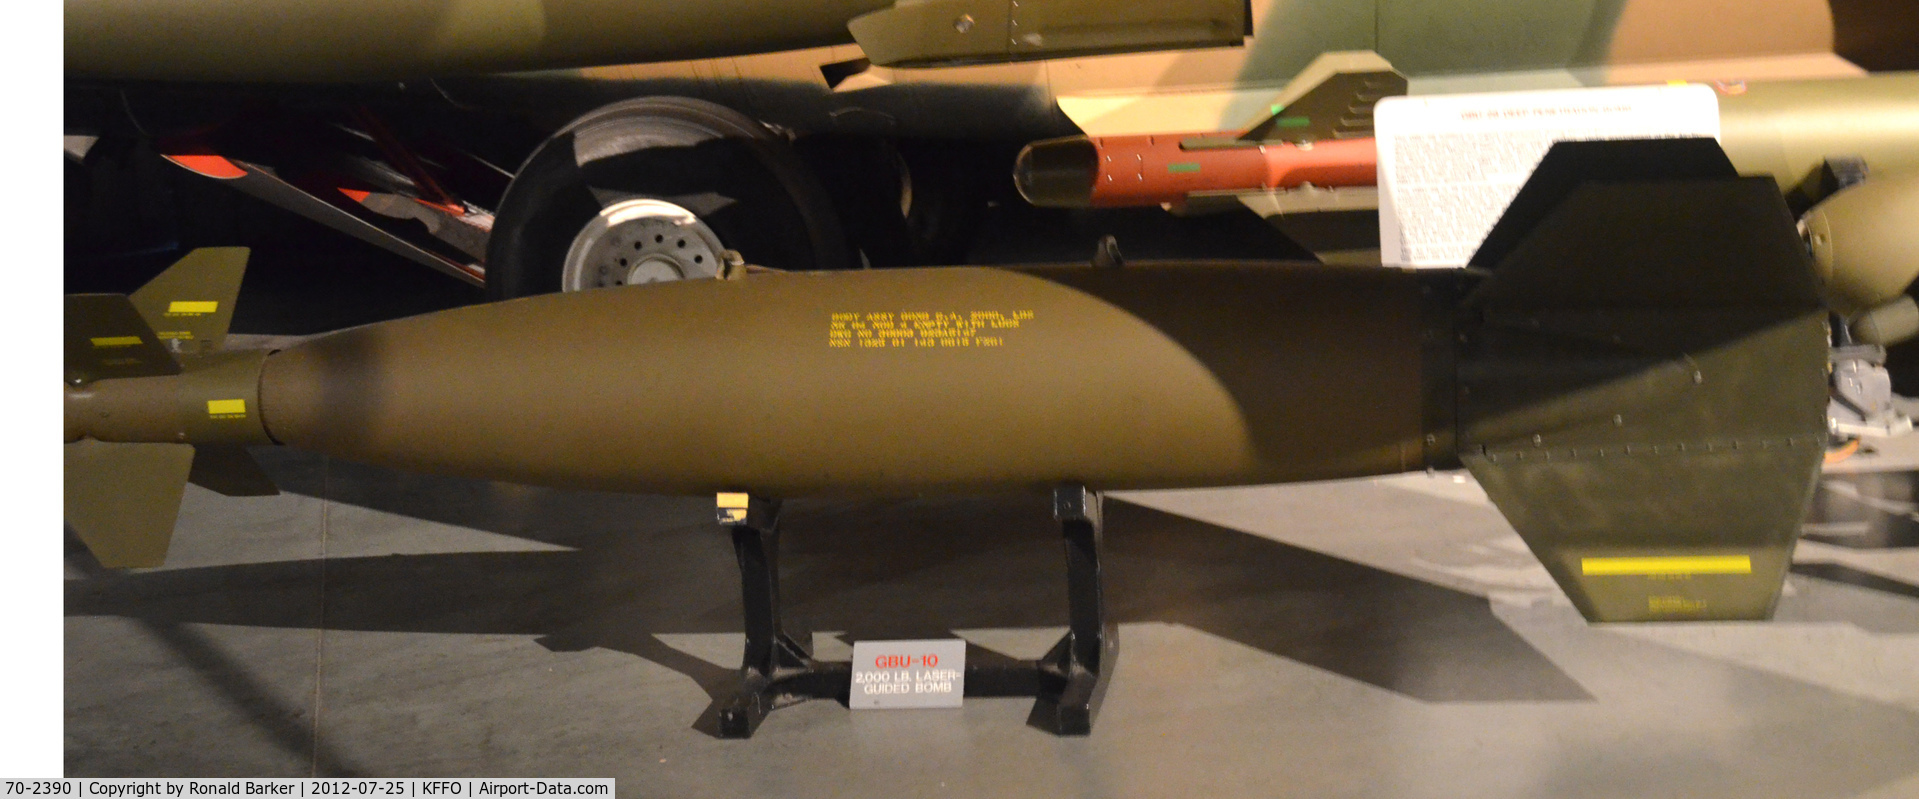 70-2390, 1970 General Dynamics F-111F Aardvark C/N E2-29, AF Museum  gbu-10   2000 lb bomb